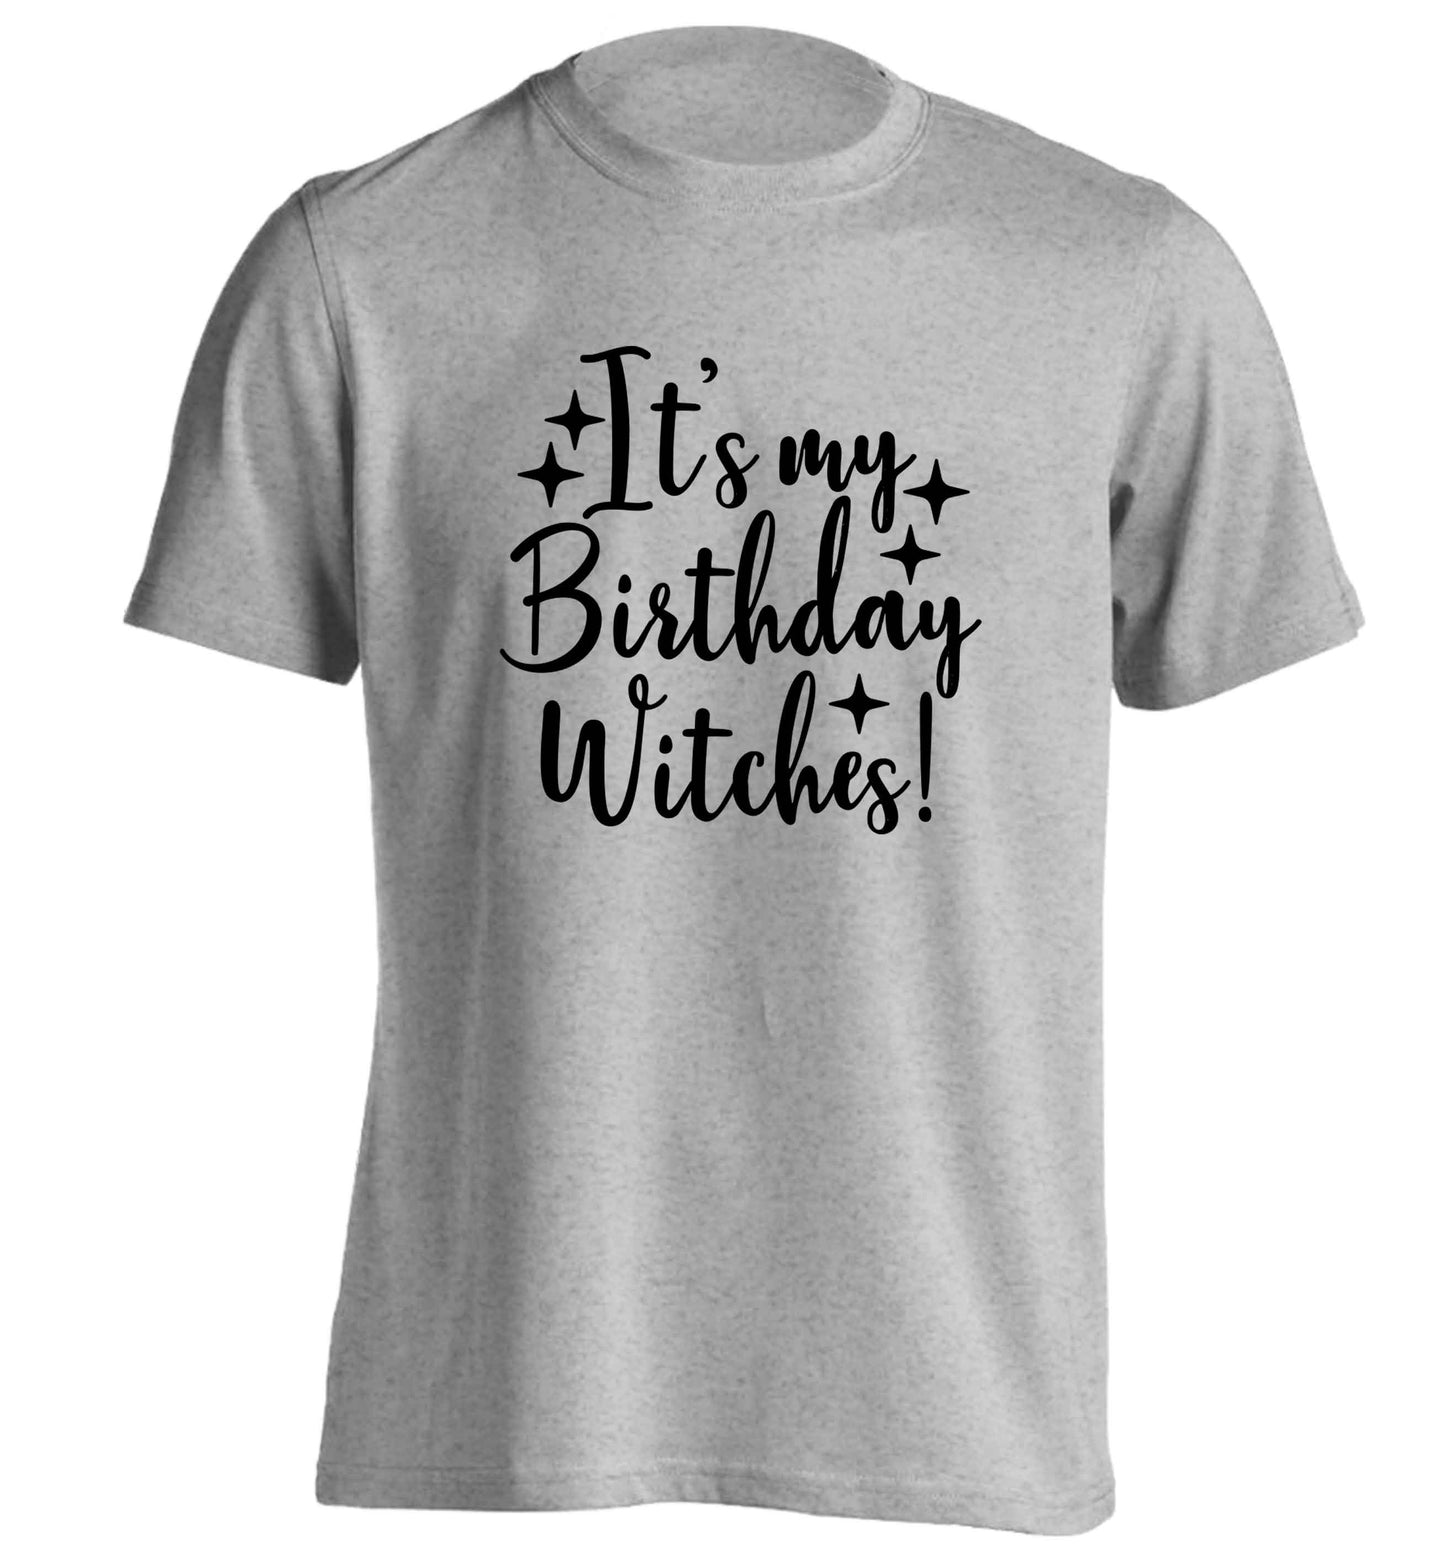 It's my birthday witches!adults unisex grey Tshirt 2XL